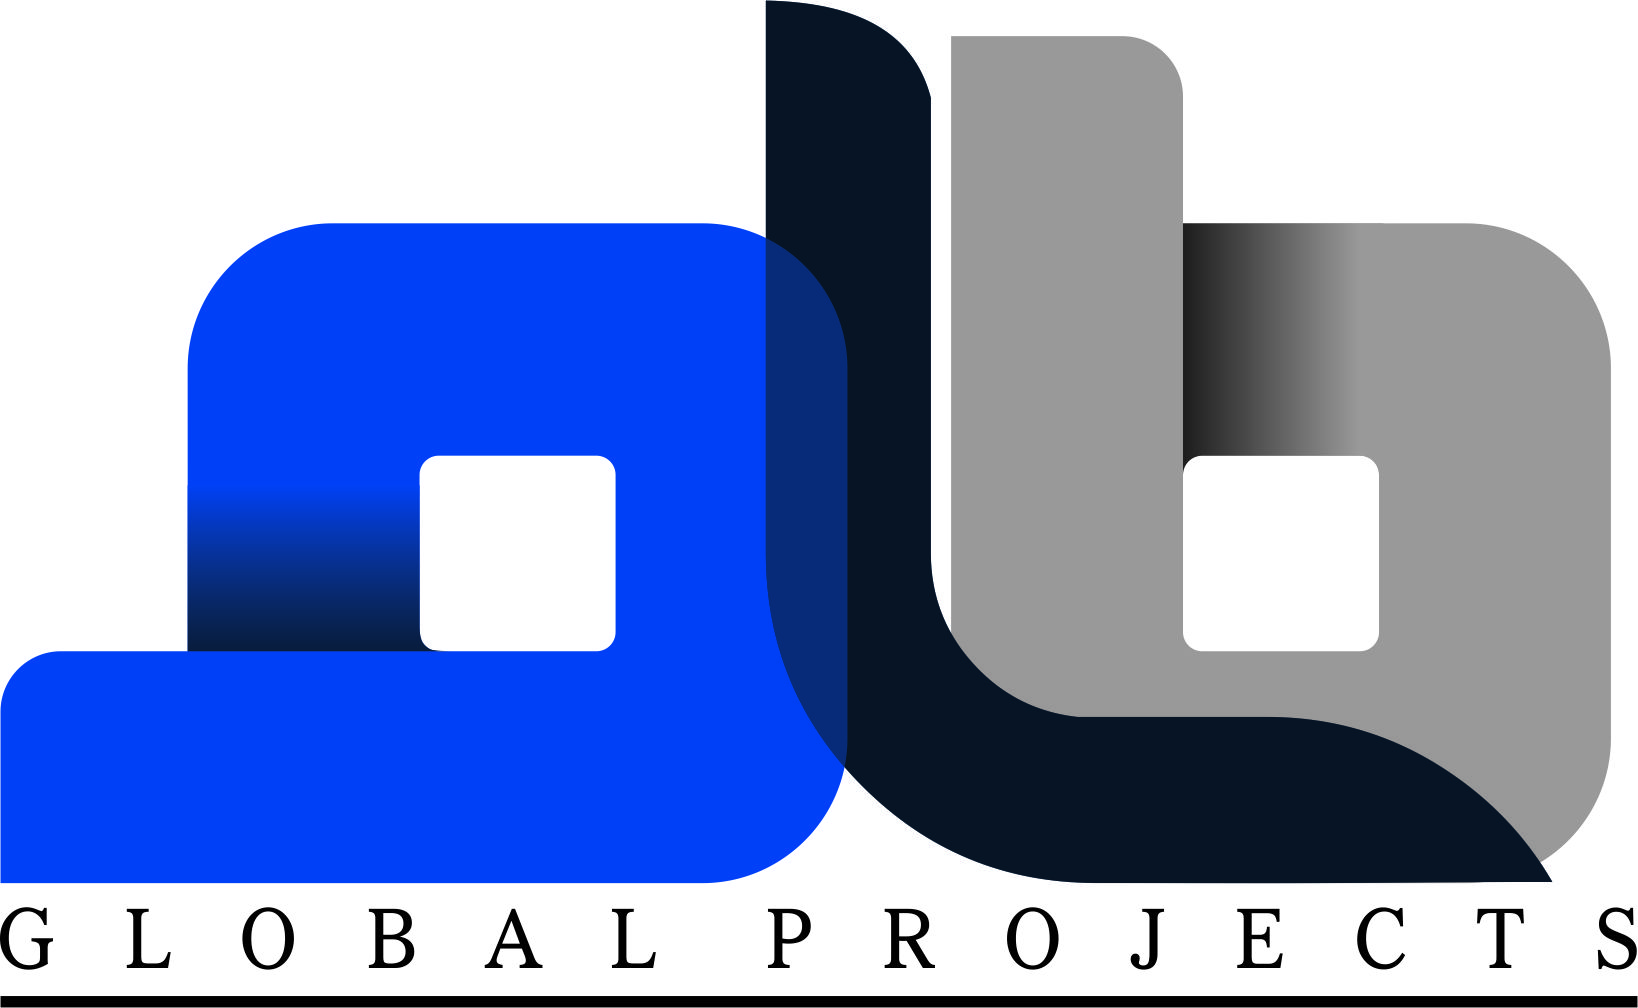 Plumbago Technologies 71 (Pty) Ltd t/a Global Projects logo